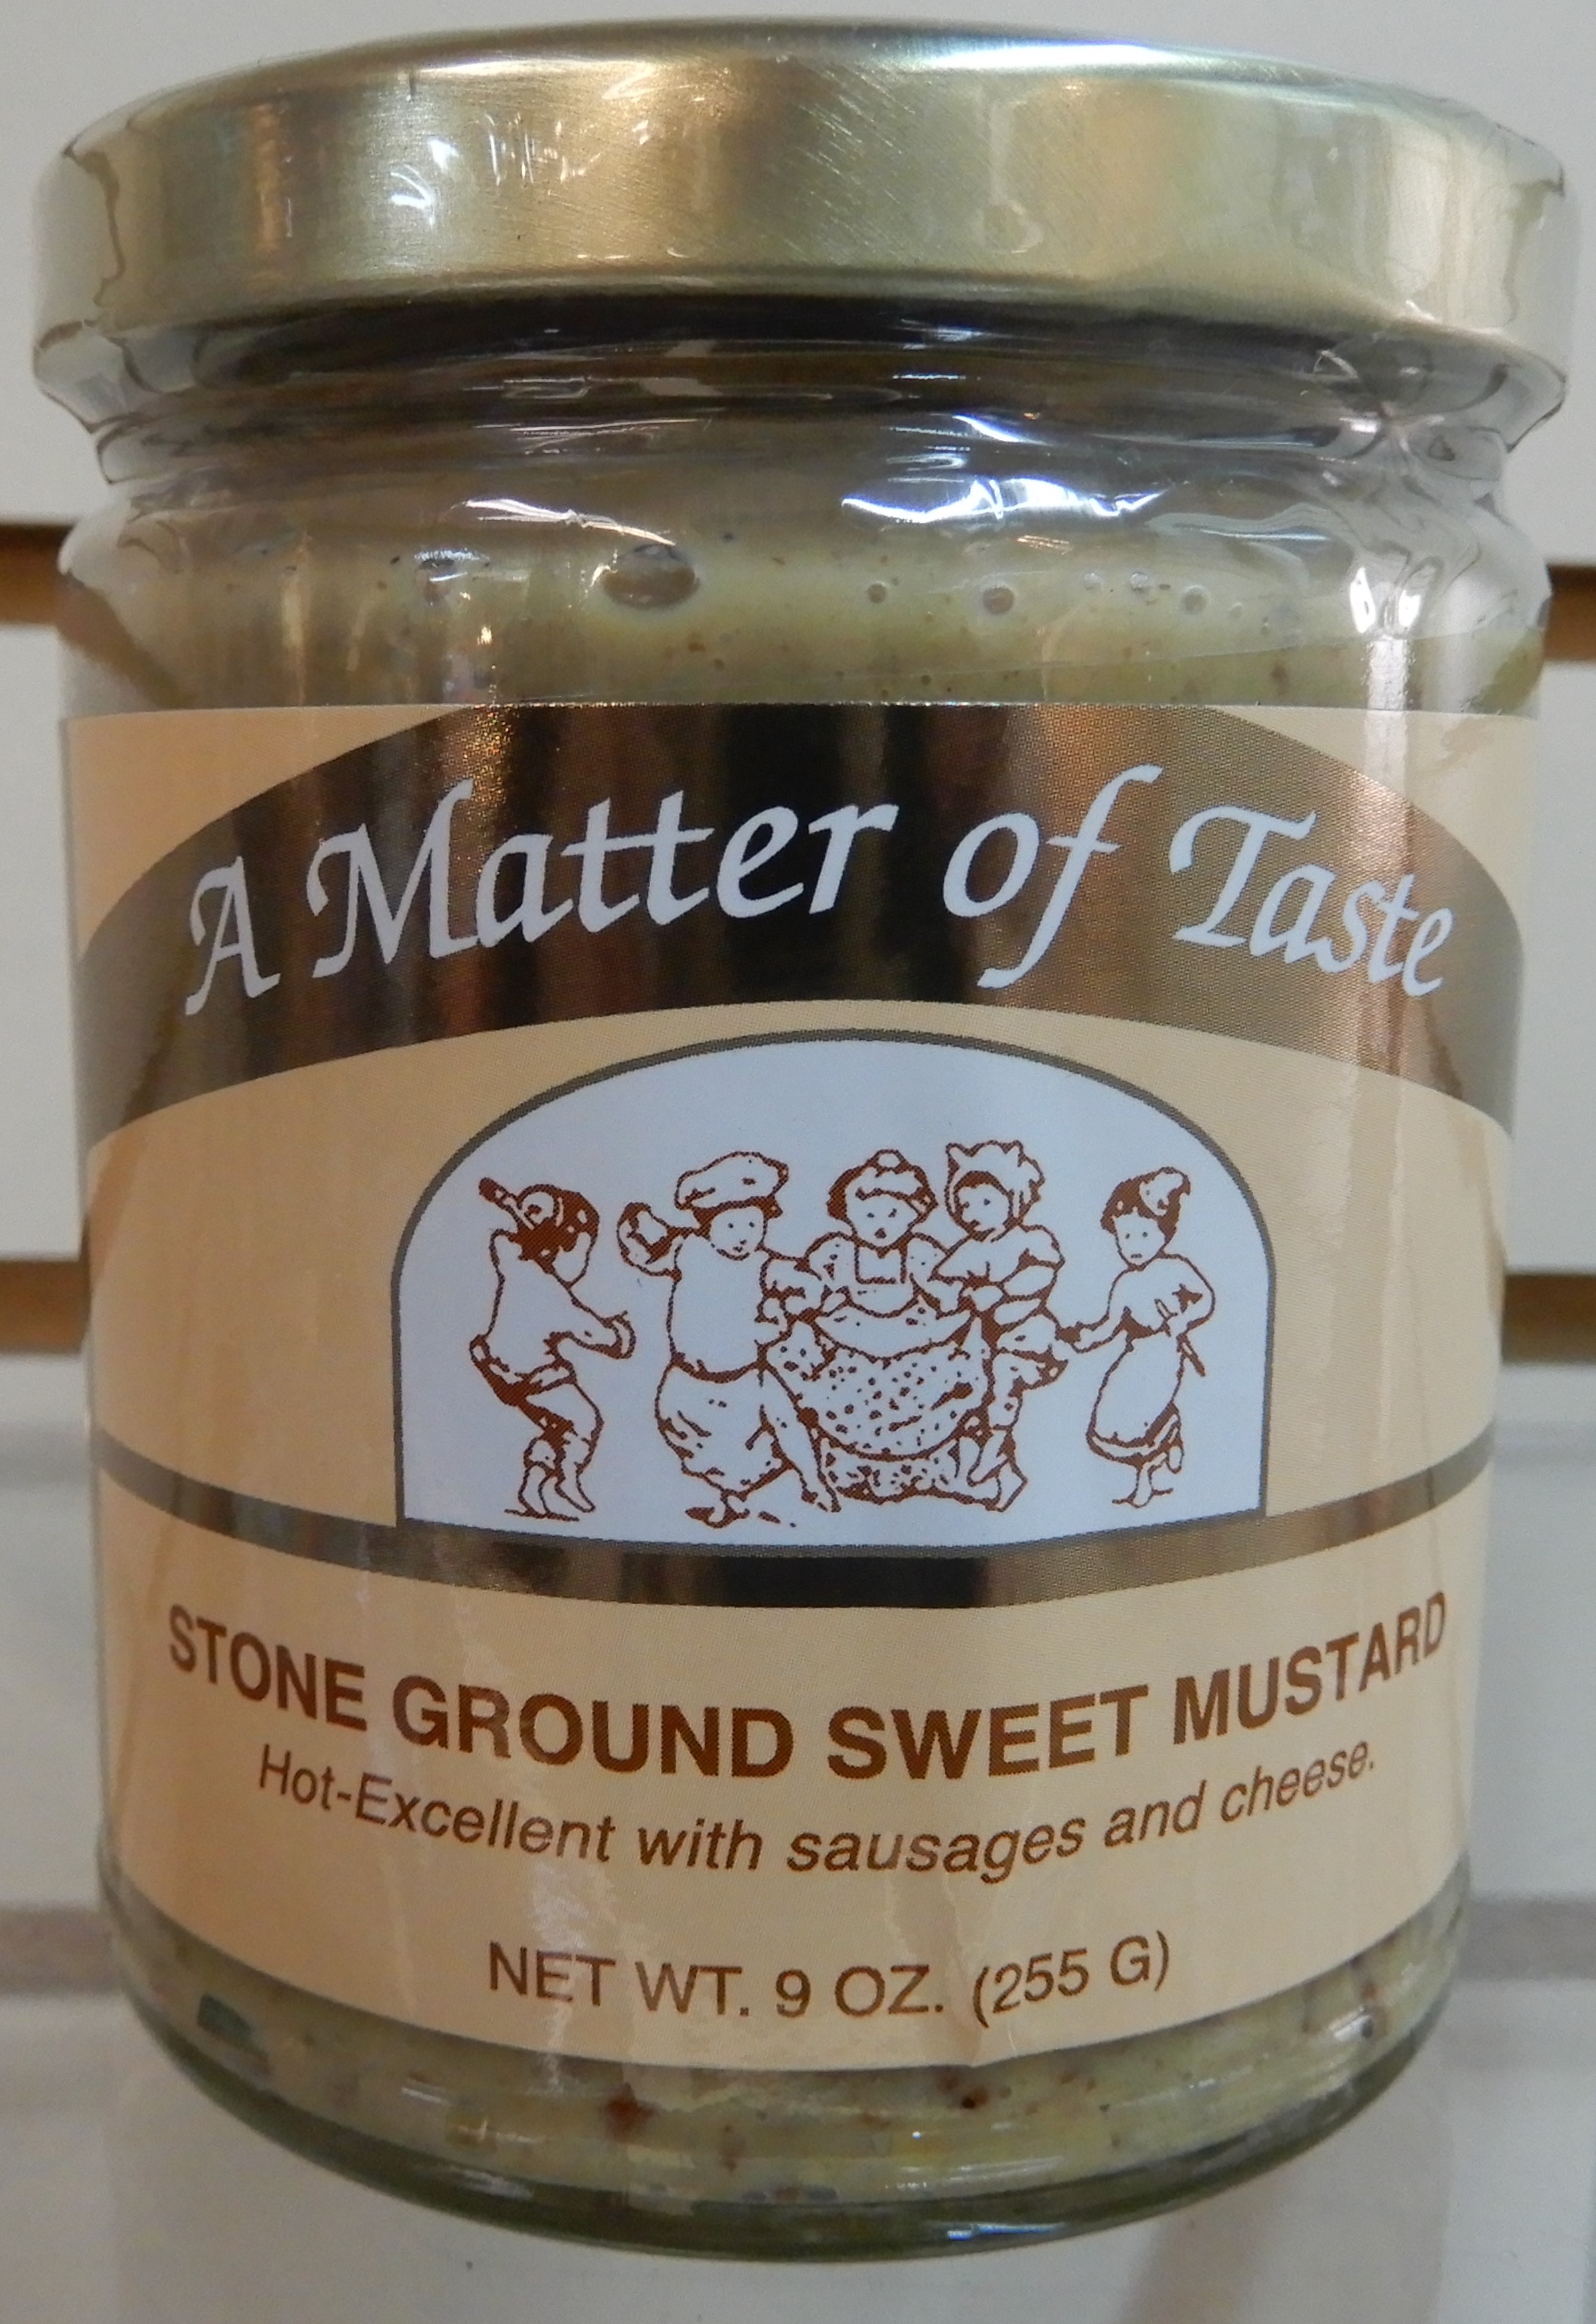 Stone Ground Mustard